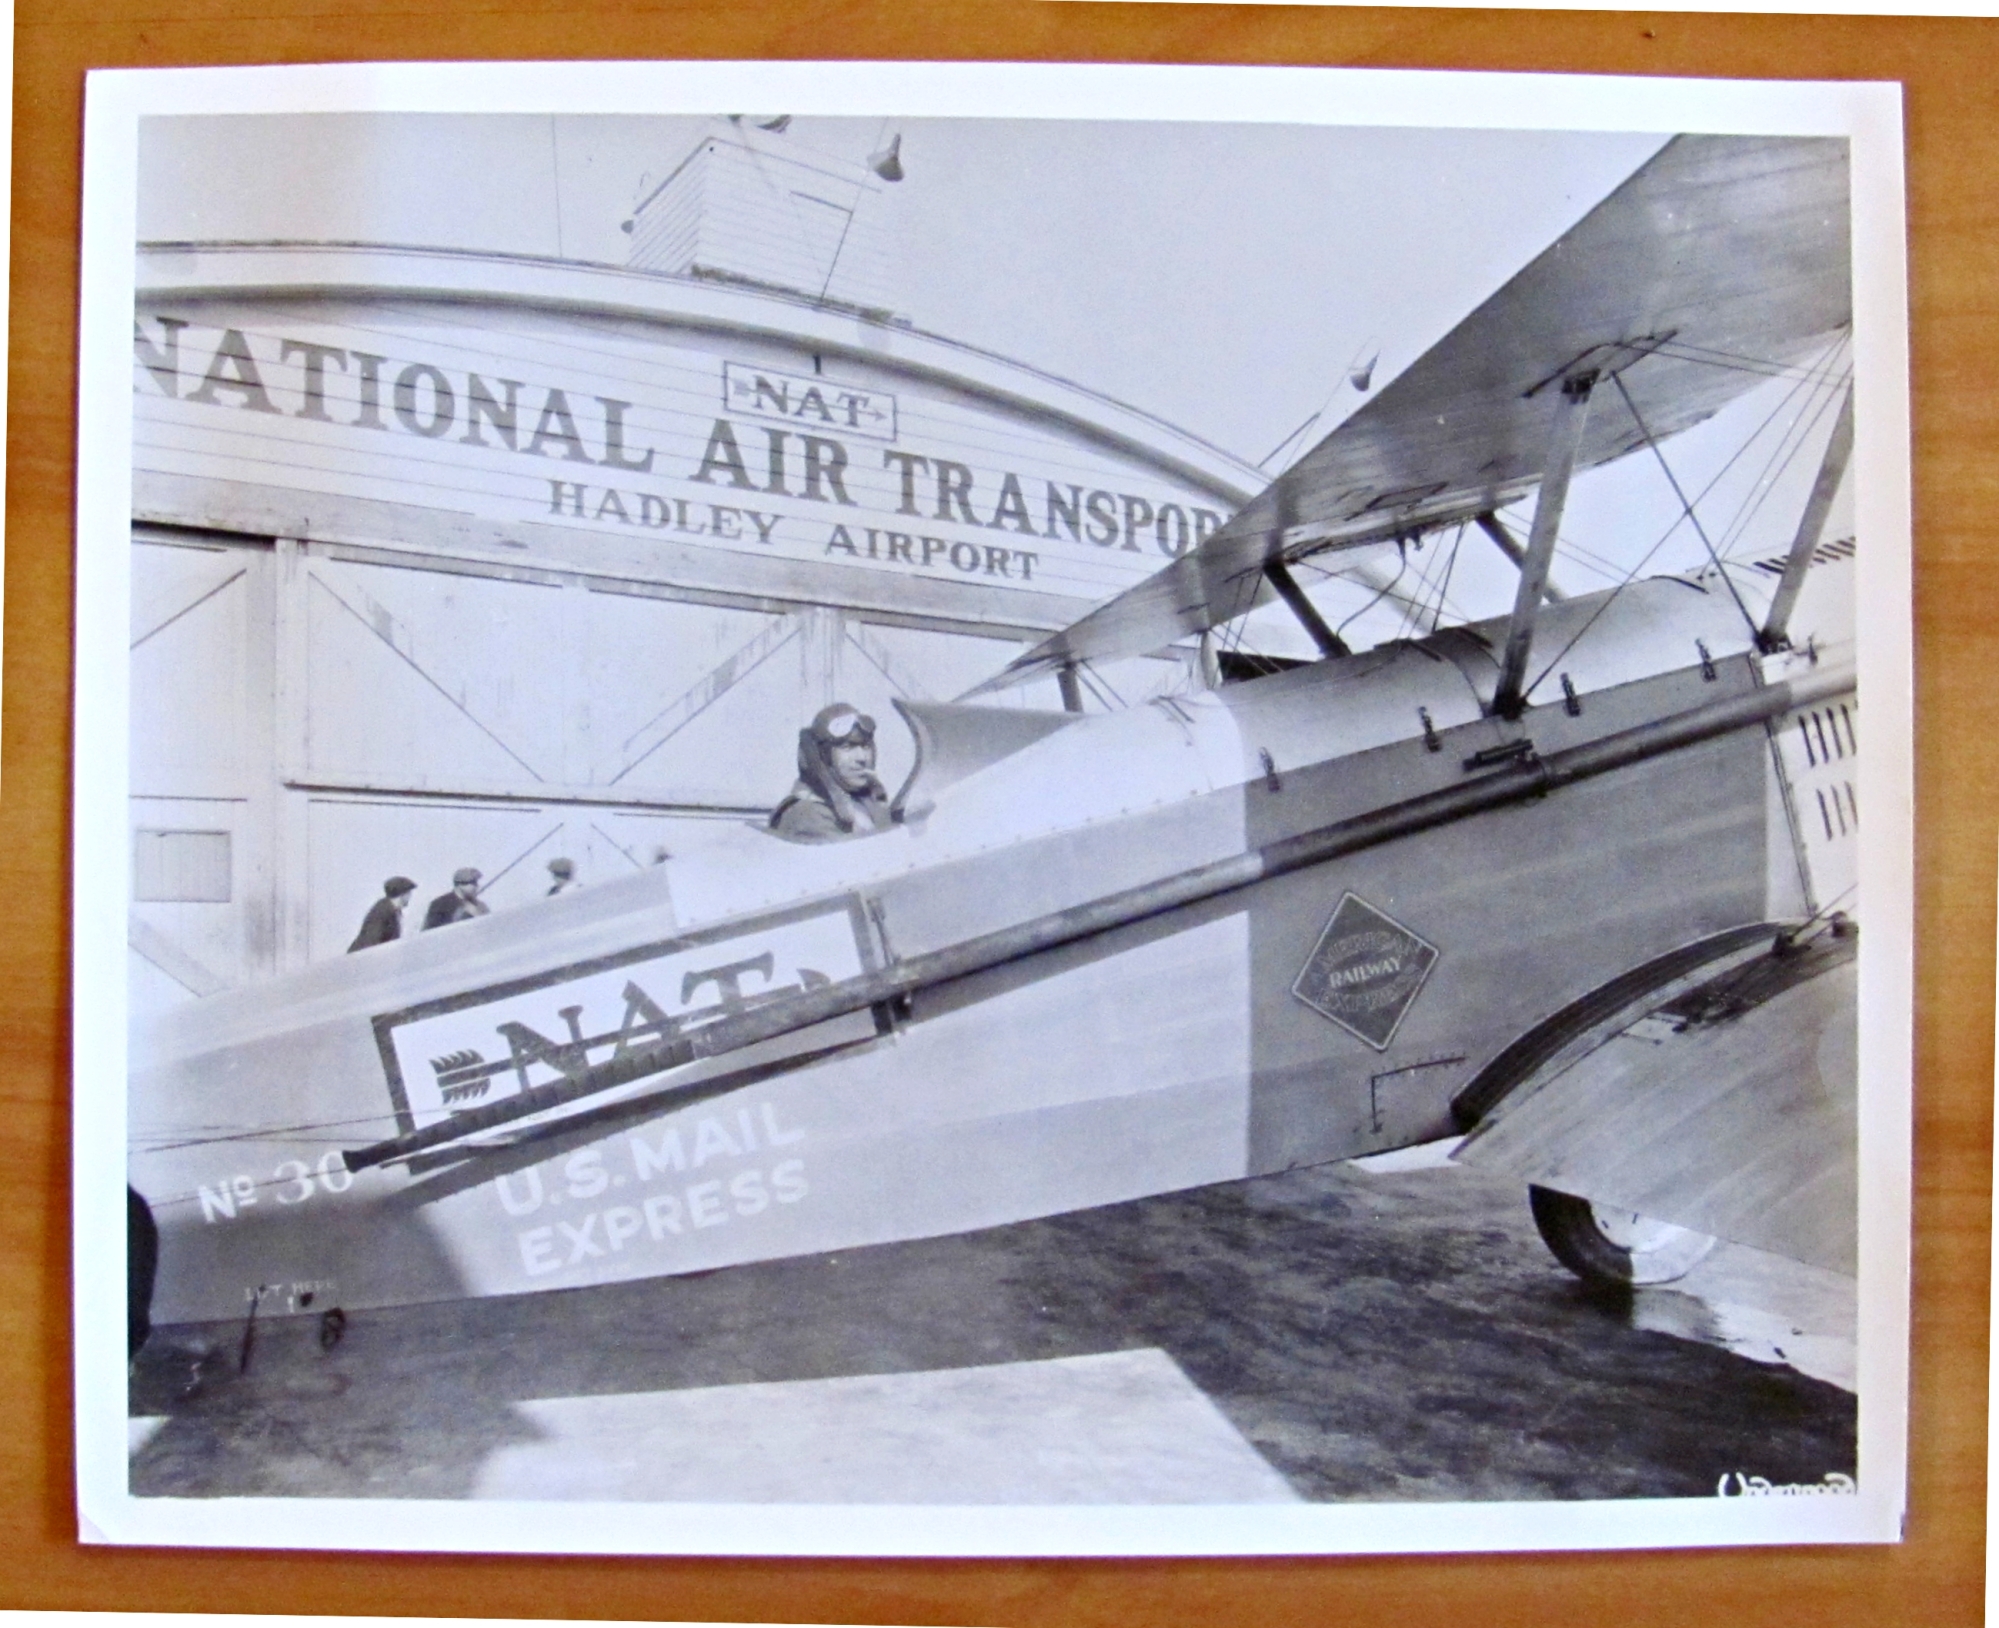 FOTO Archivio - N.A.T. National Air Transport U.S. Mail Express